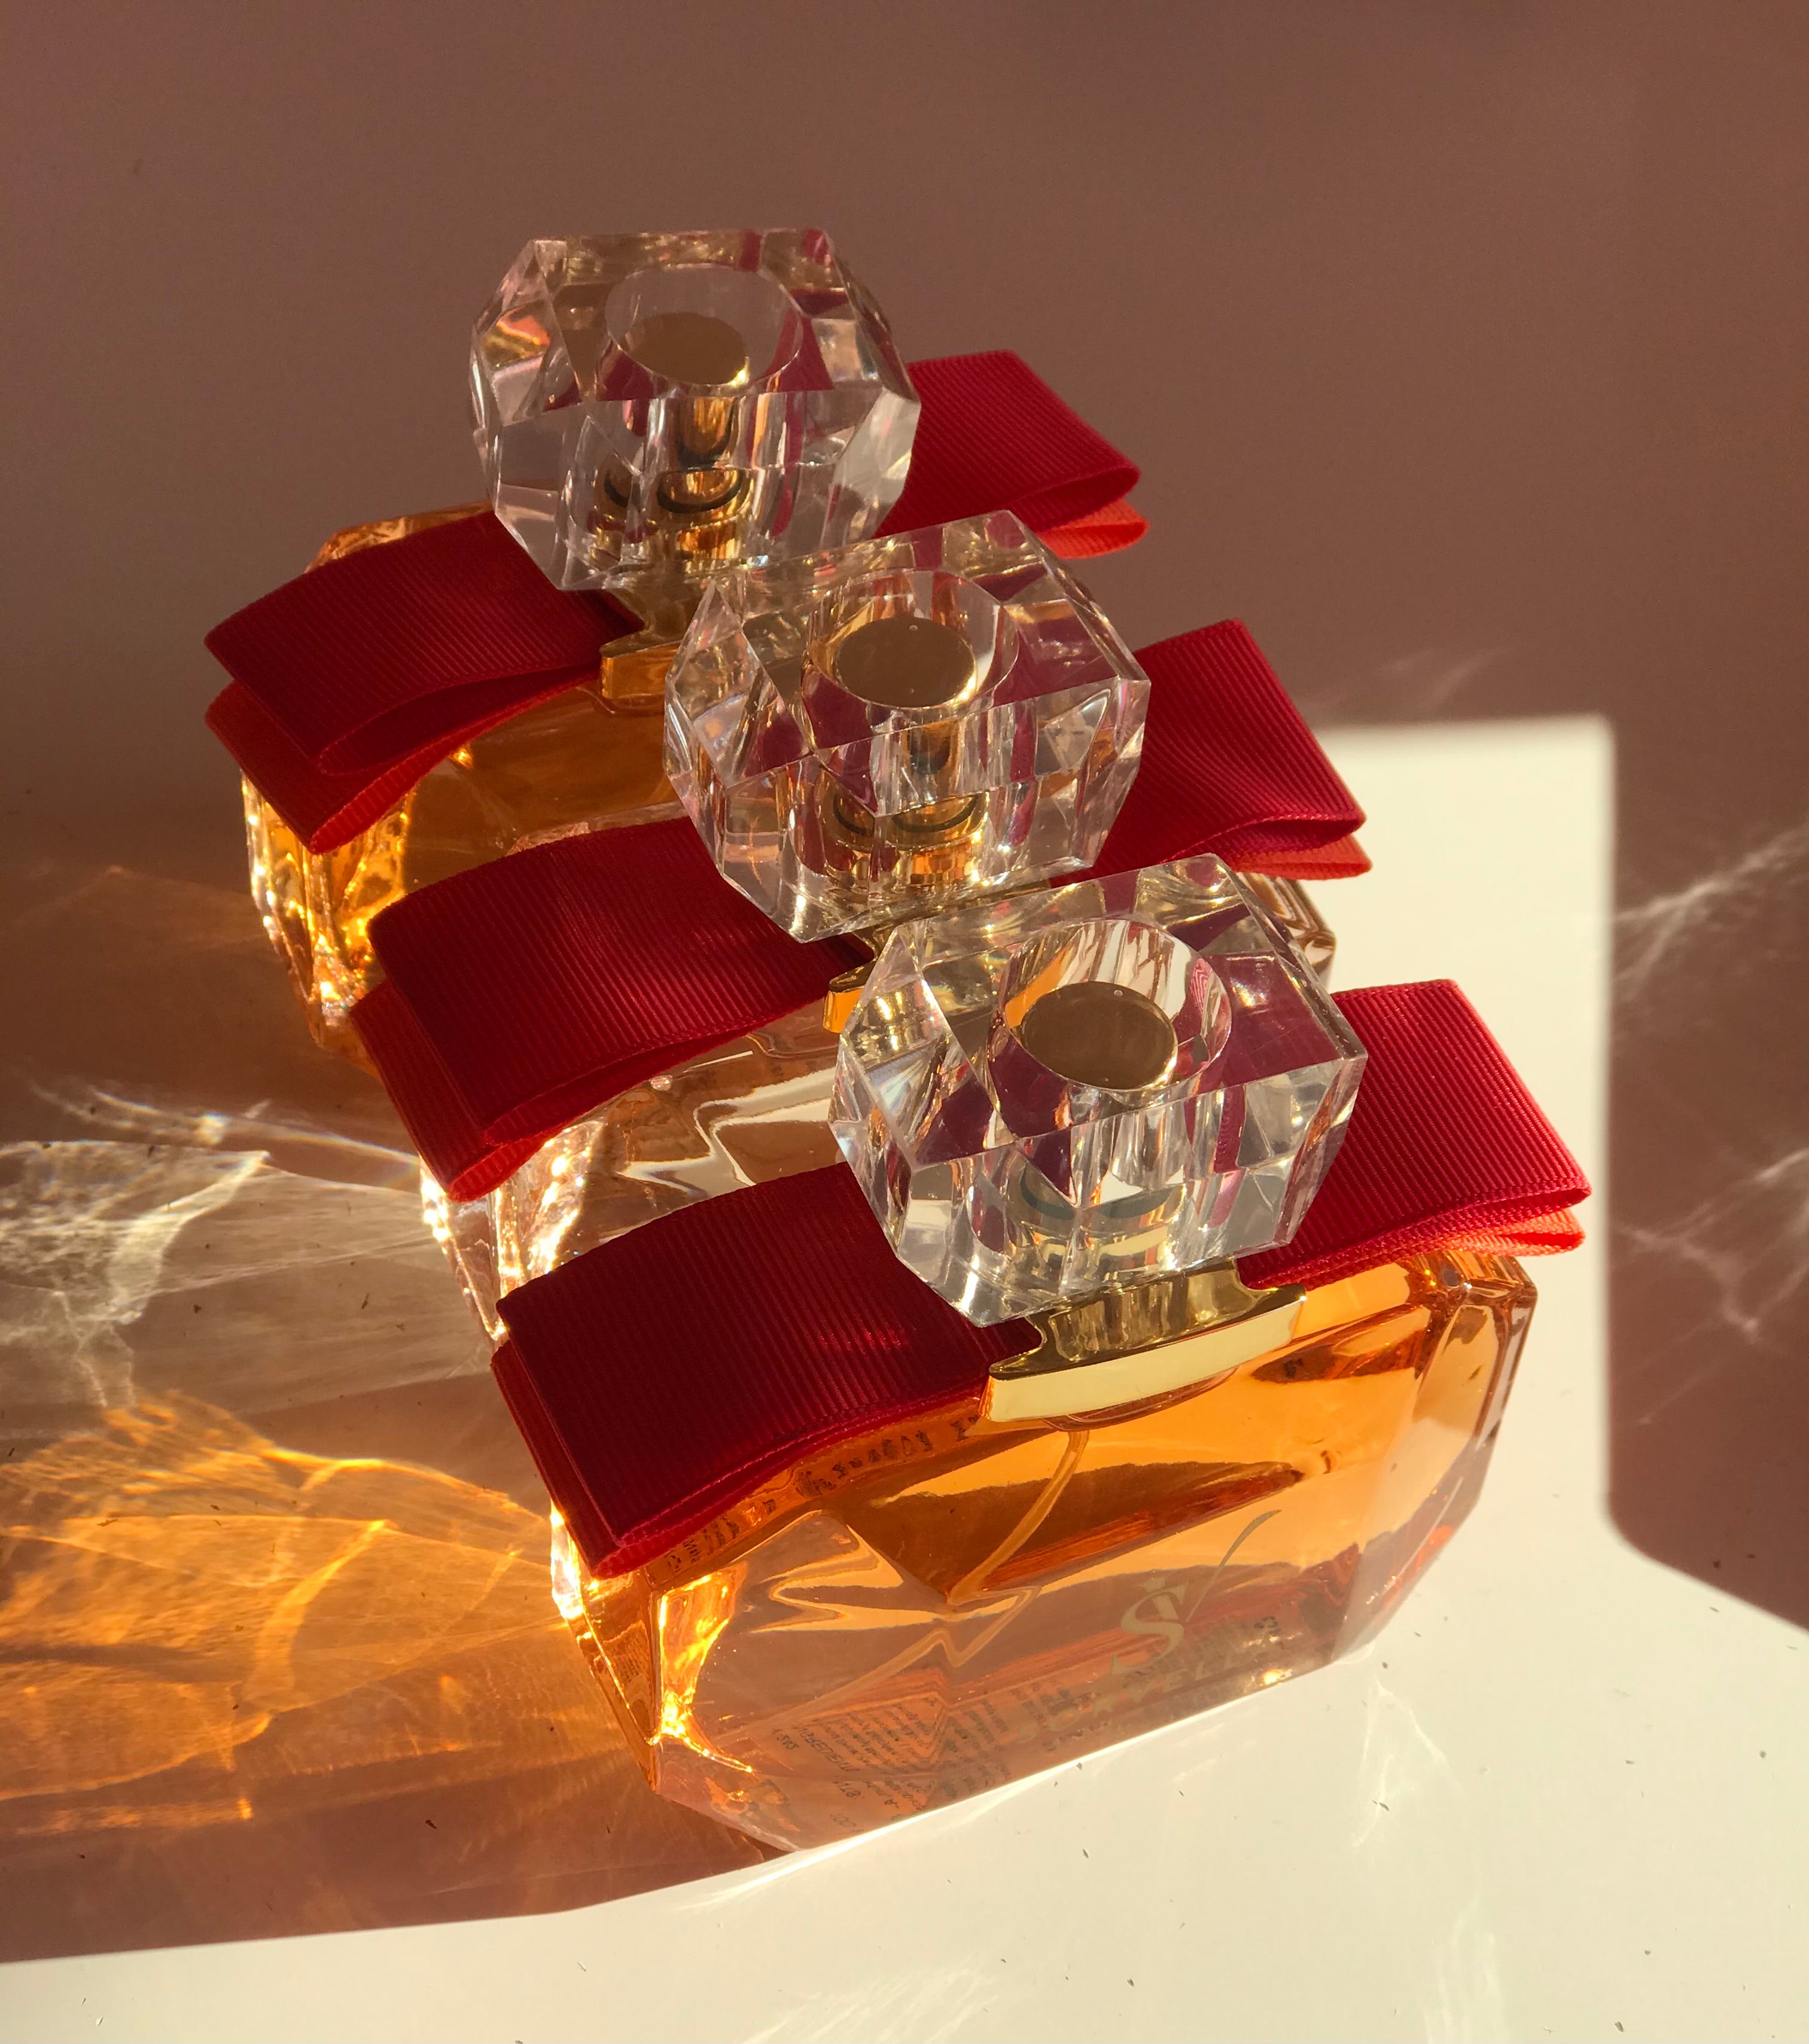 V208 - Ange ou demon le secret 100 ml Sorvella Citrus Women's Perfume